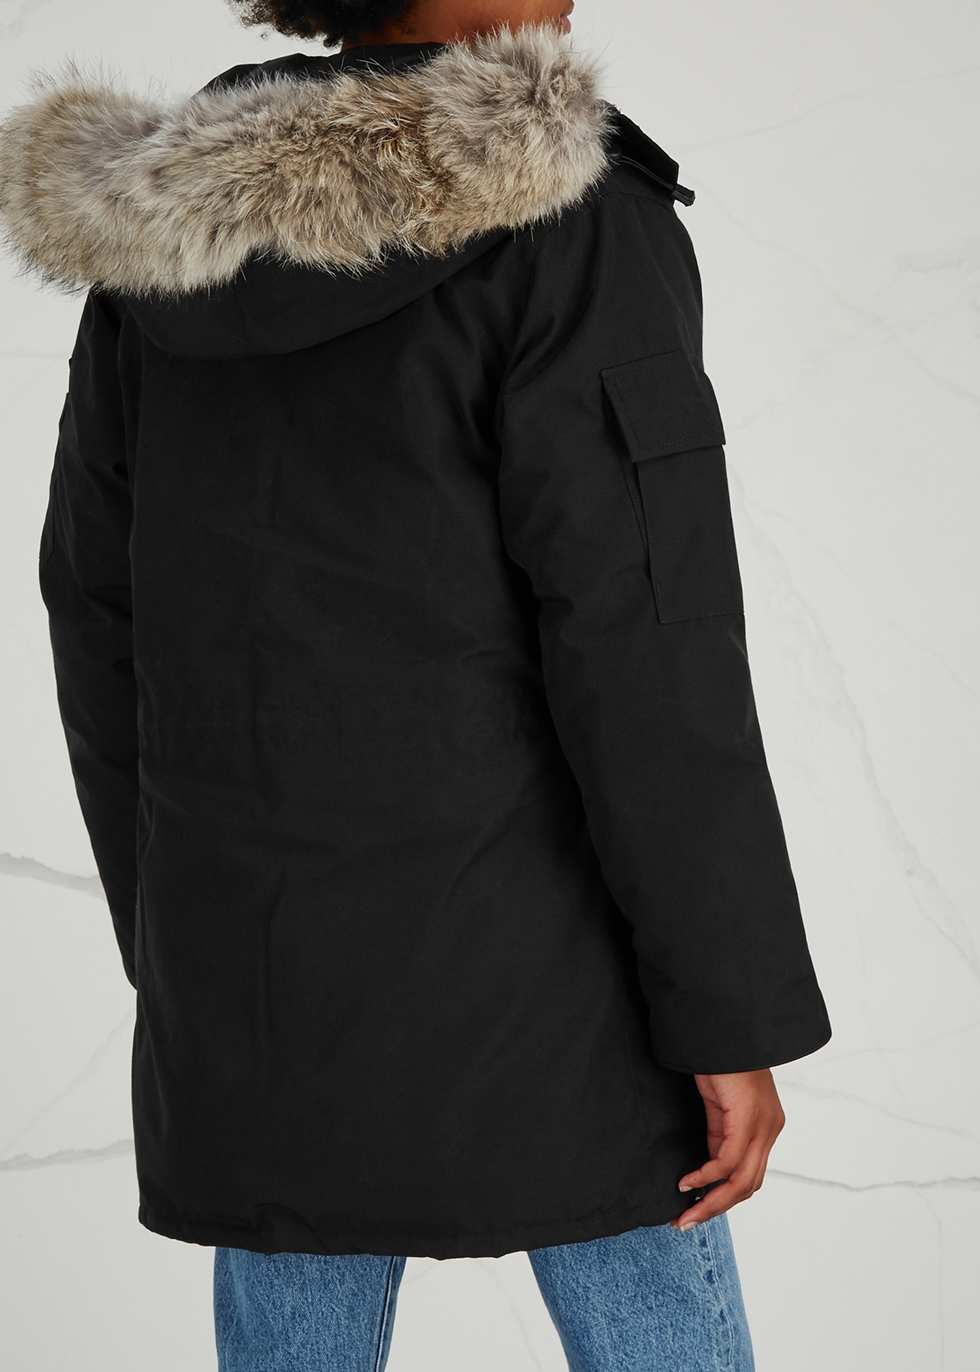 Harvey Nichols Clothing Coats Parkas KIDS Brittania black hooded Arctic-Tech parka 